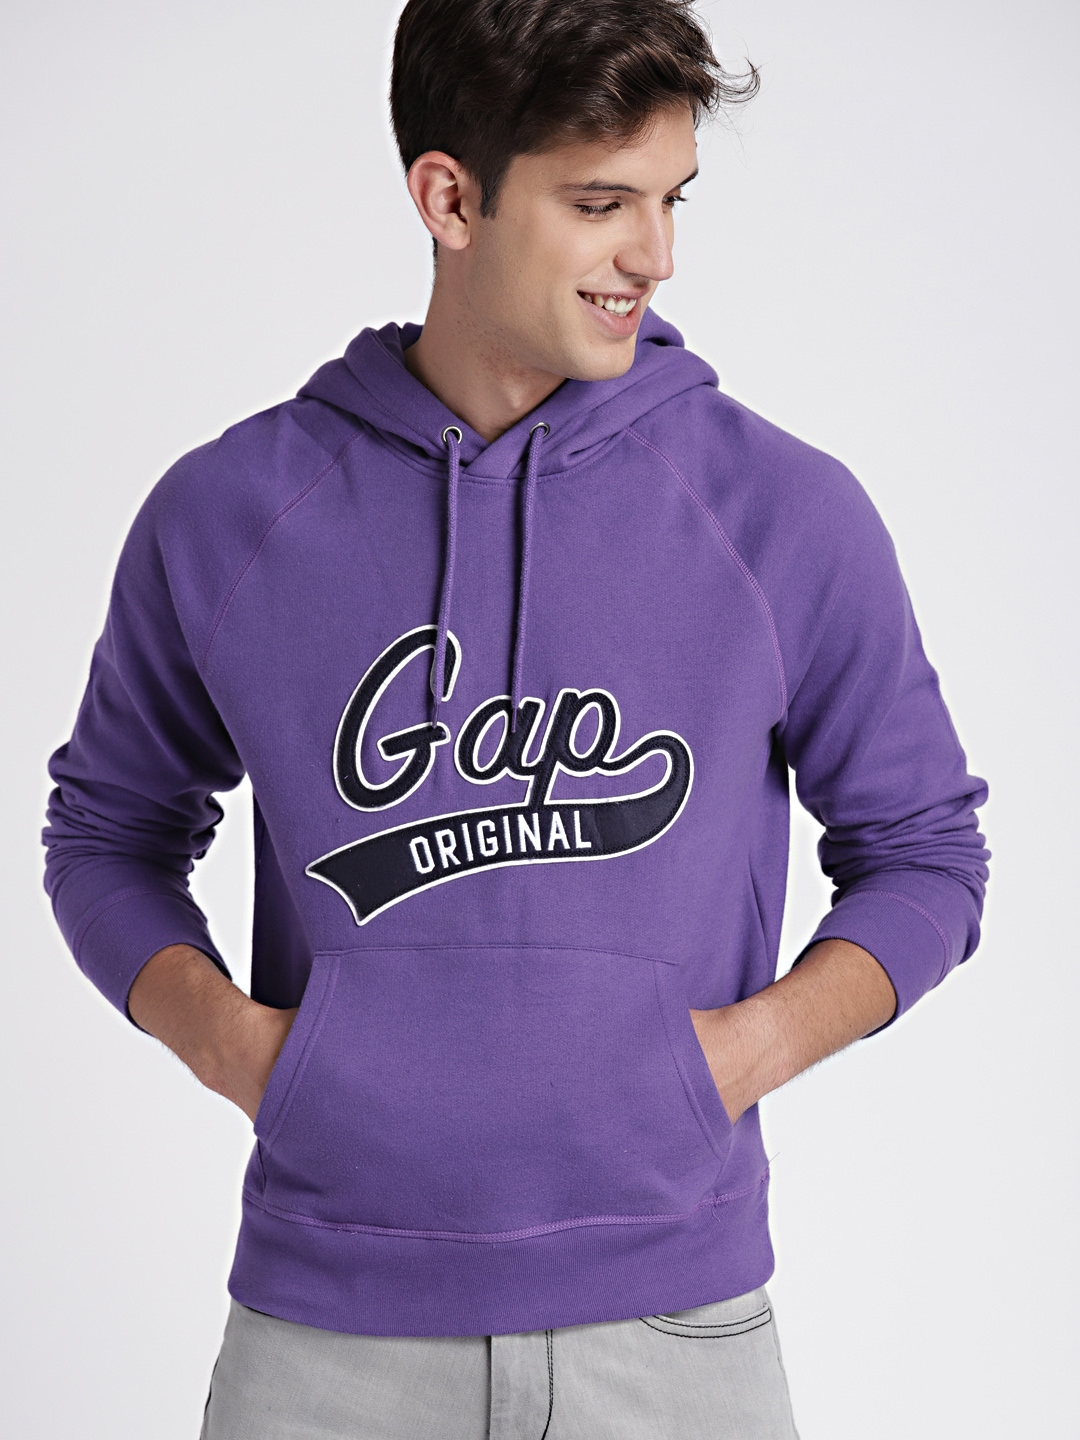 purple gap sweatshirt